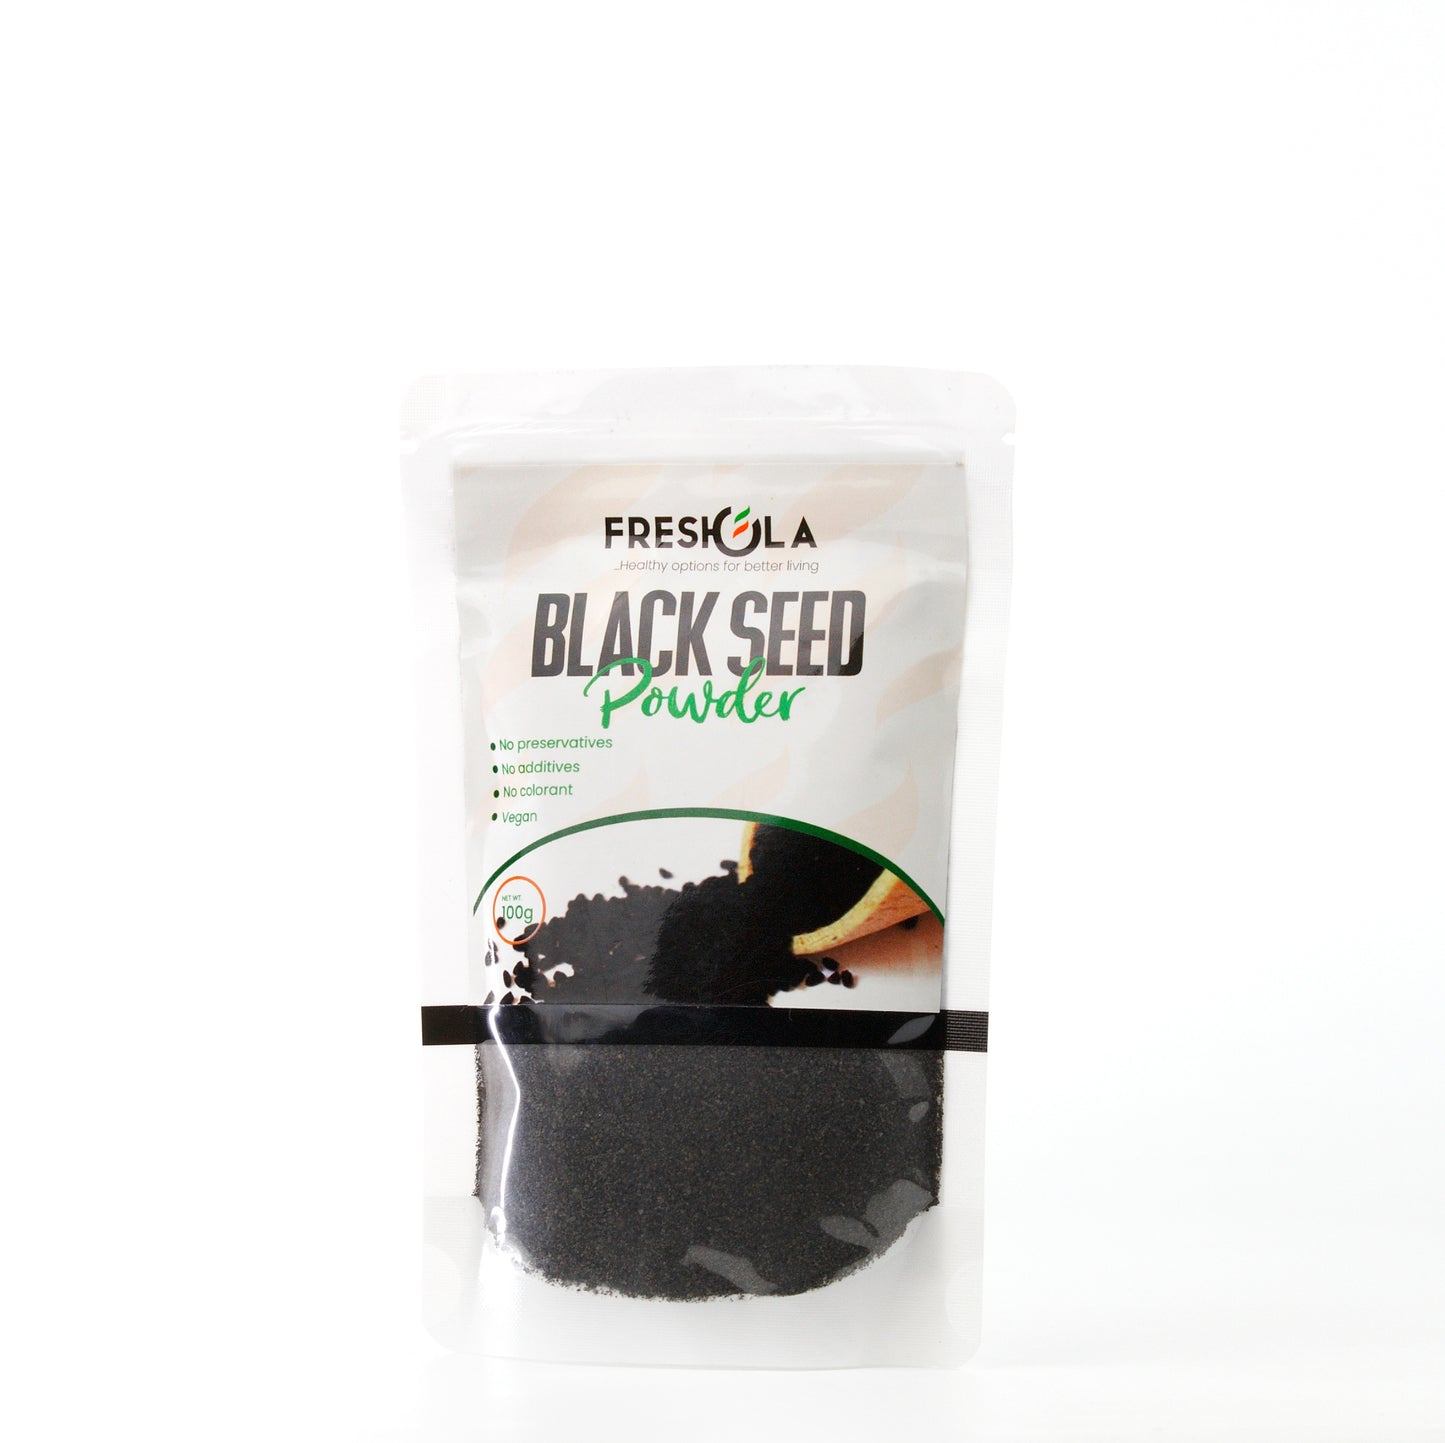 Blackseed Powder